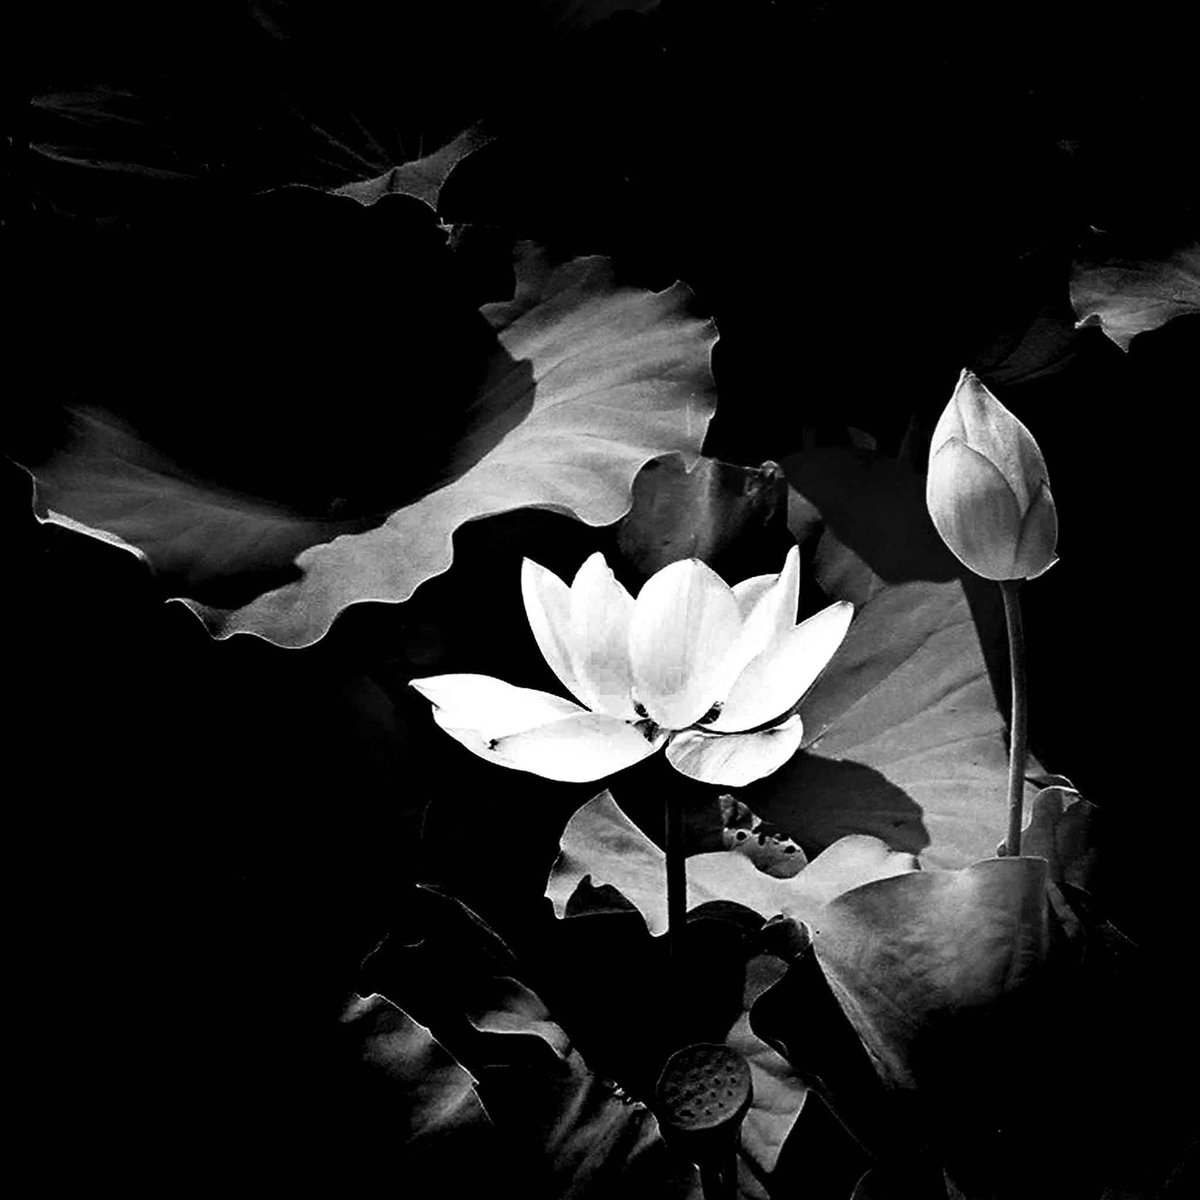 More Trees ; - Flower of Summer - 
#blackandwhitephotography  
#blackandwhite  #blackandwhitephoto  
#fotografia #blancoynegro #Flowers 
#写真　#写真好きな人とつながりたい 

photo by Taizo Hayashi ; Japan